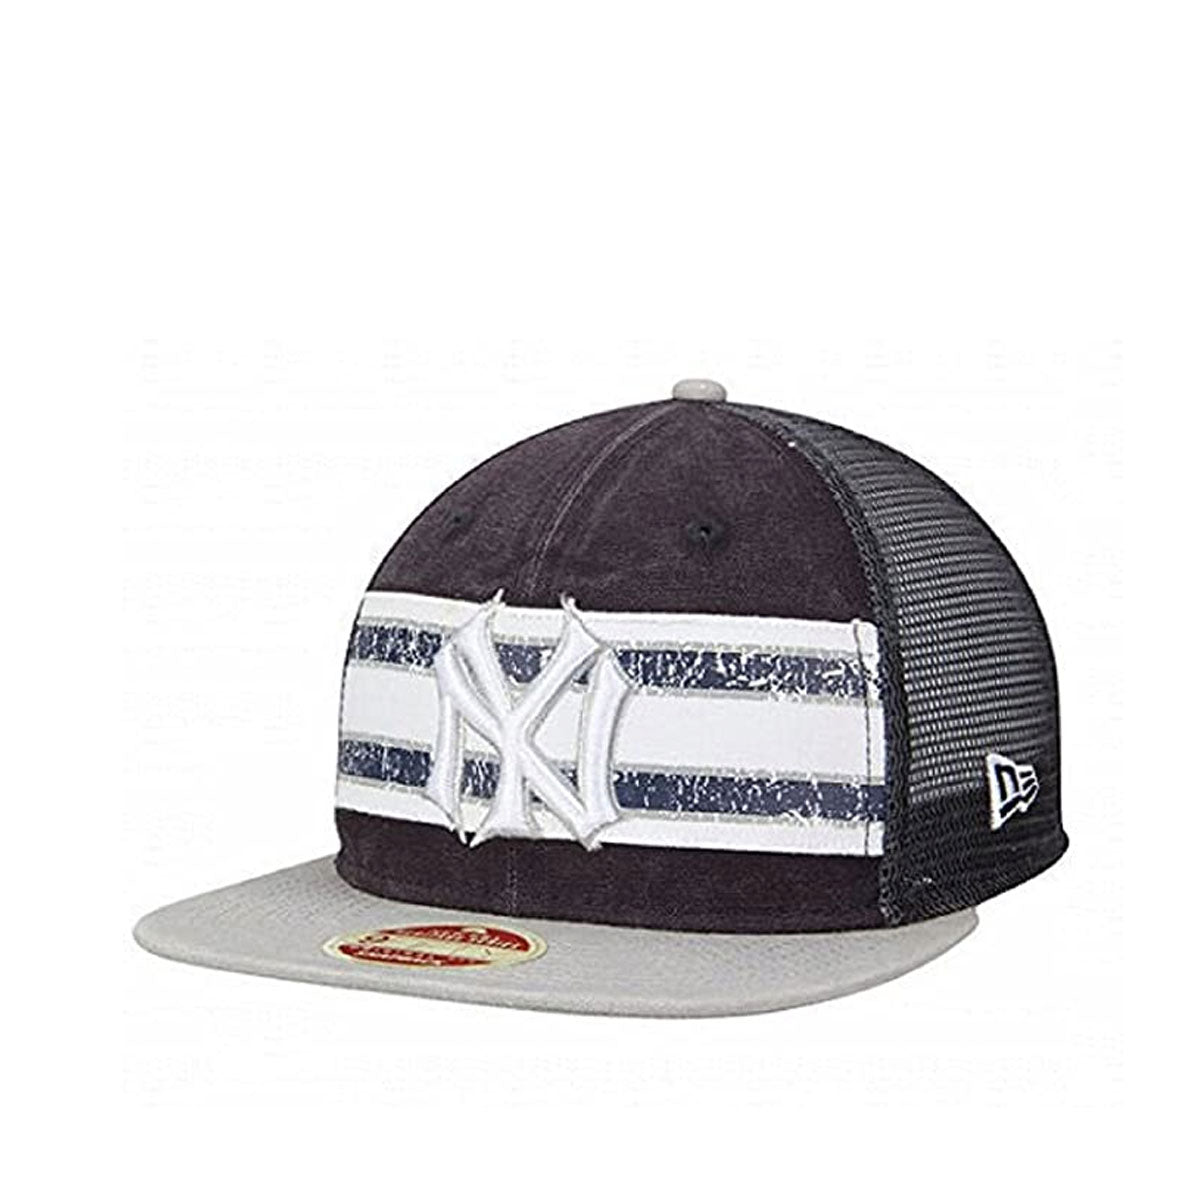 New York Yankees New Era Blackout Trucker 9FIFTY Snapback Hat